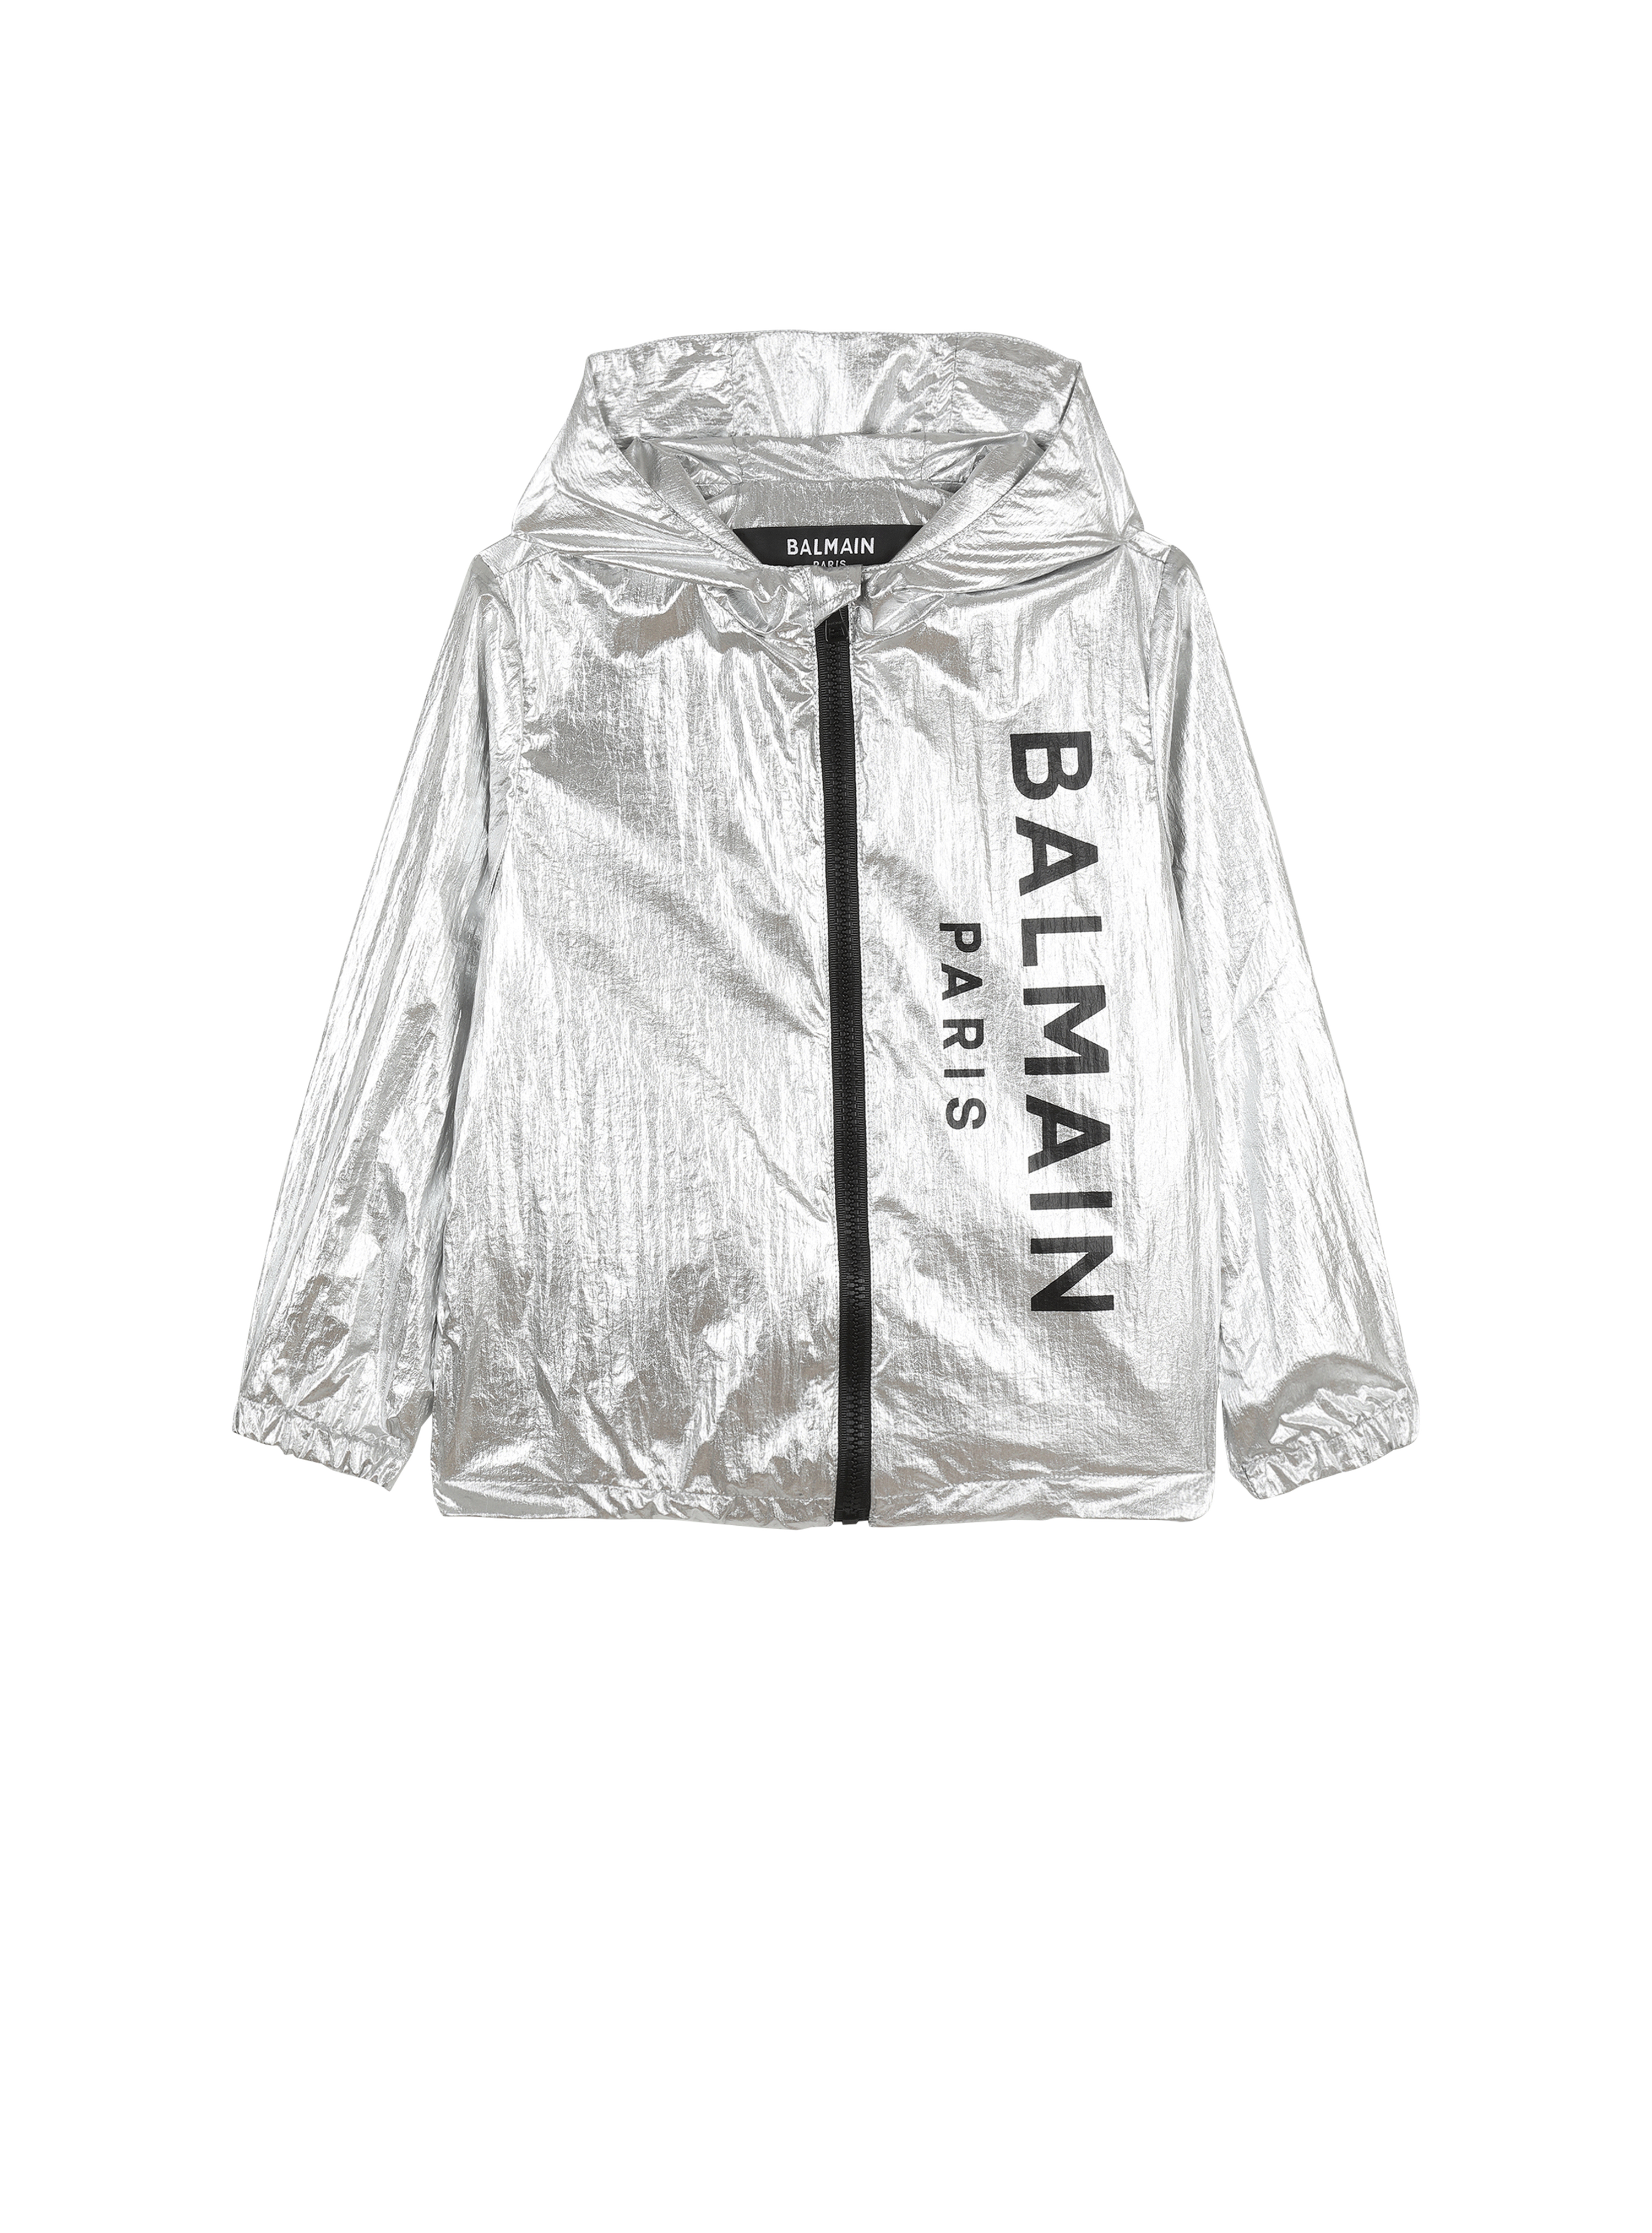 Hooded jacket with Balmain logo, silver